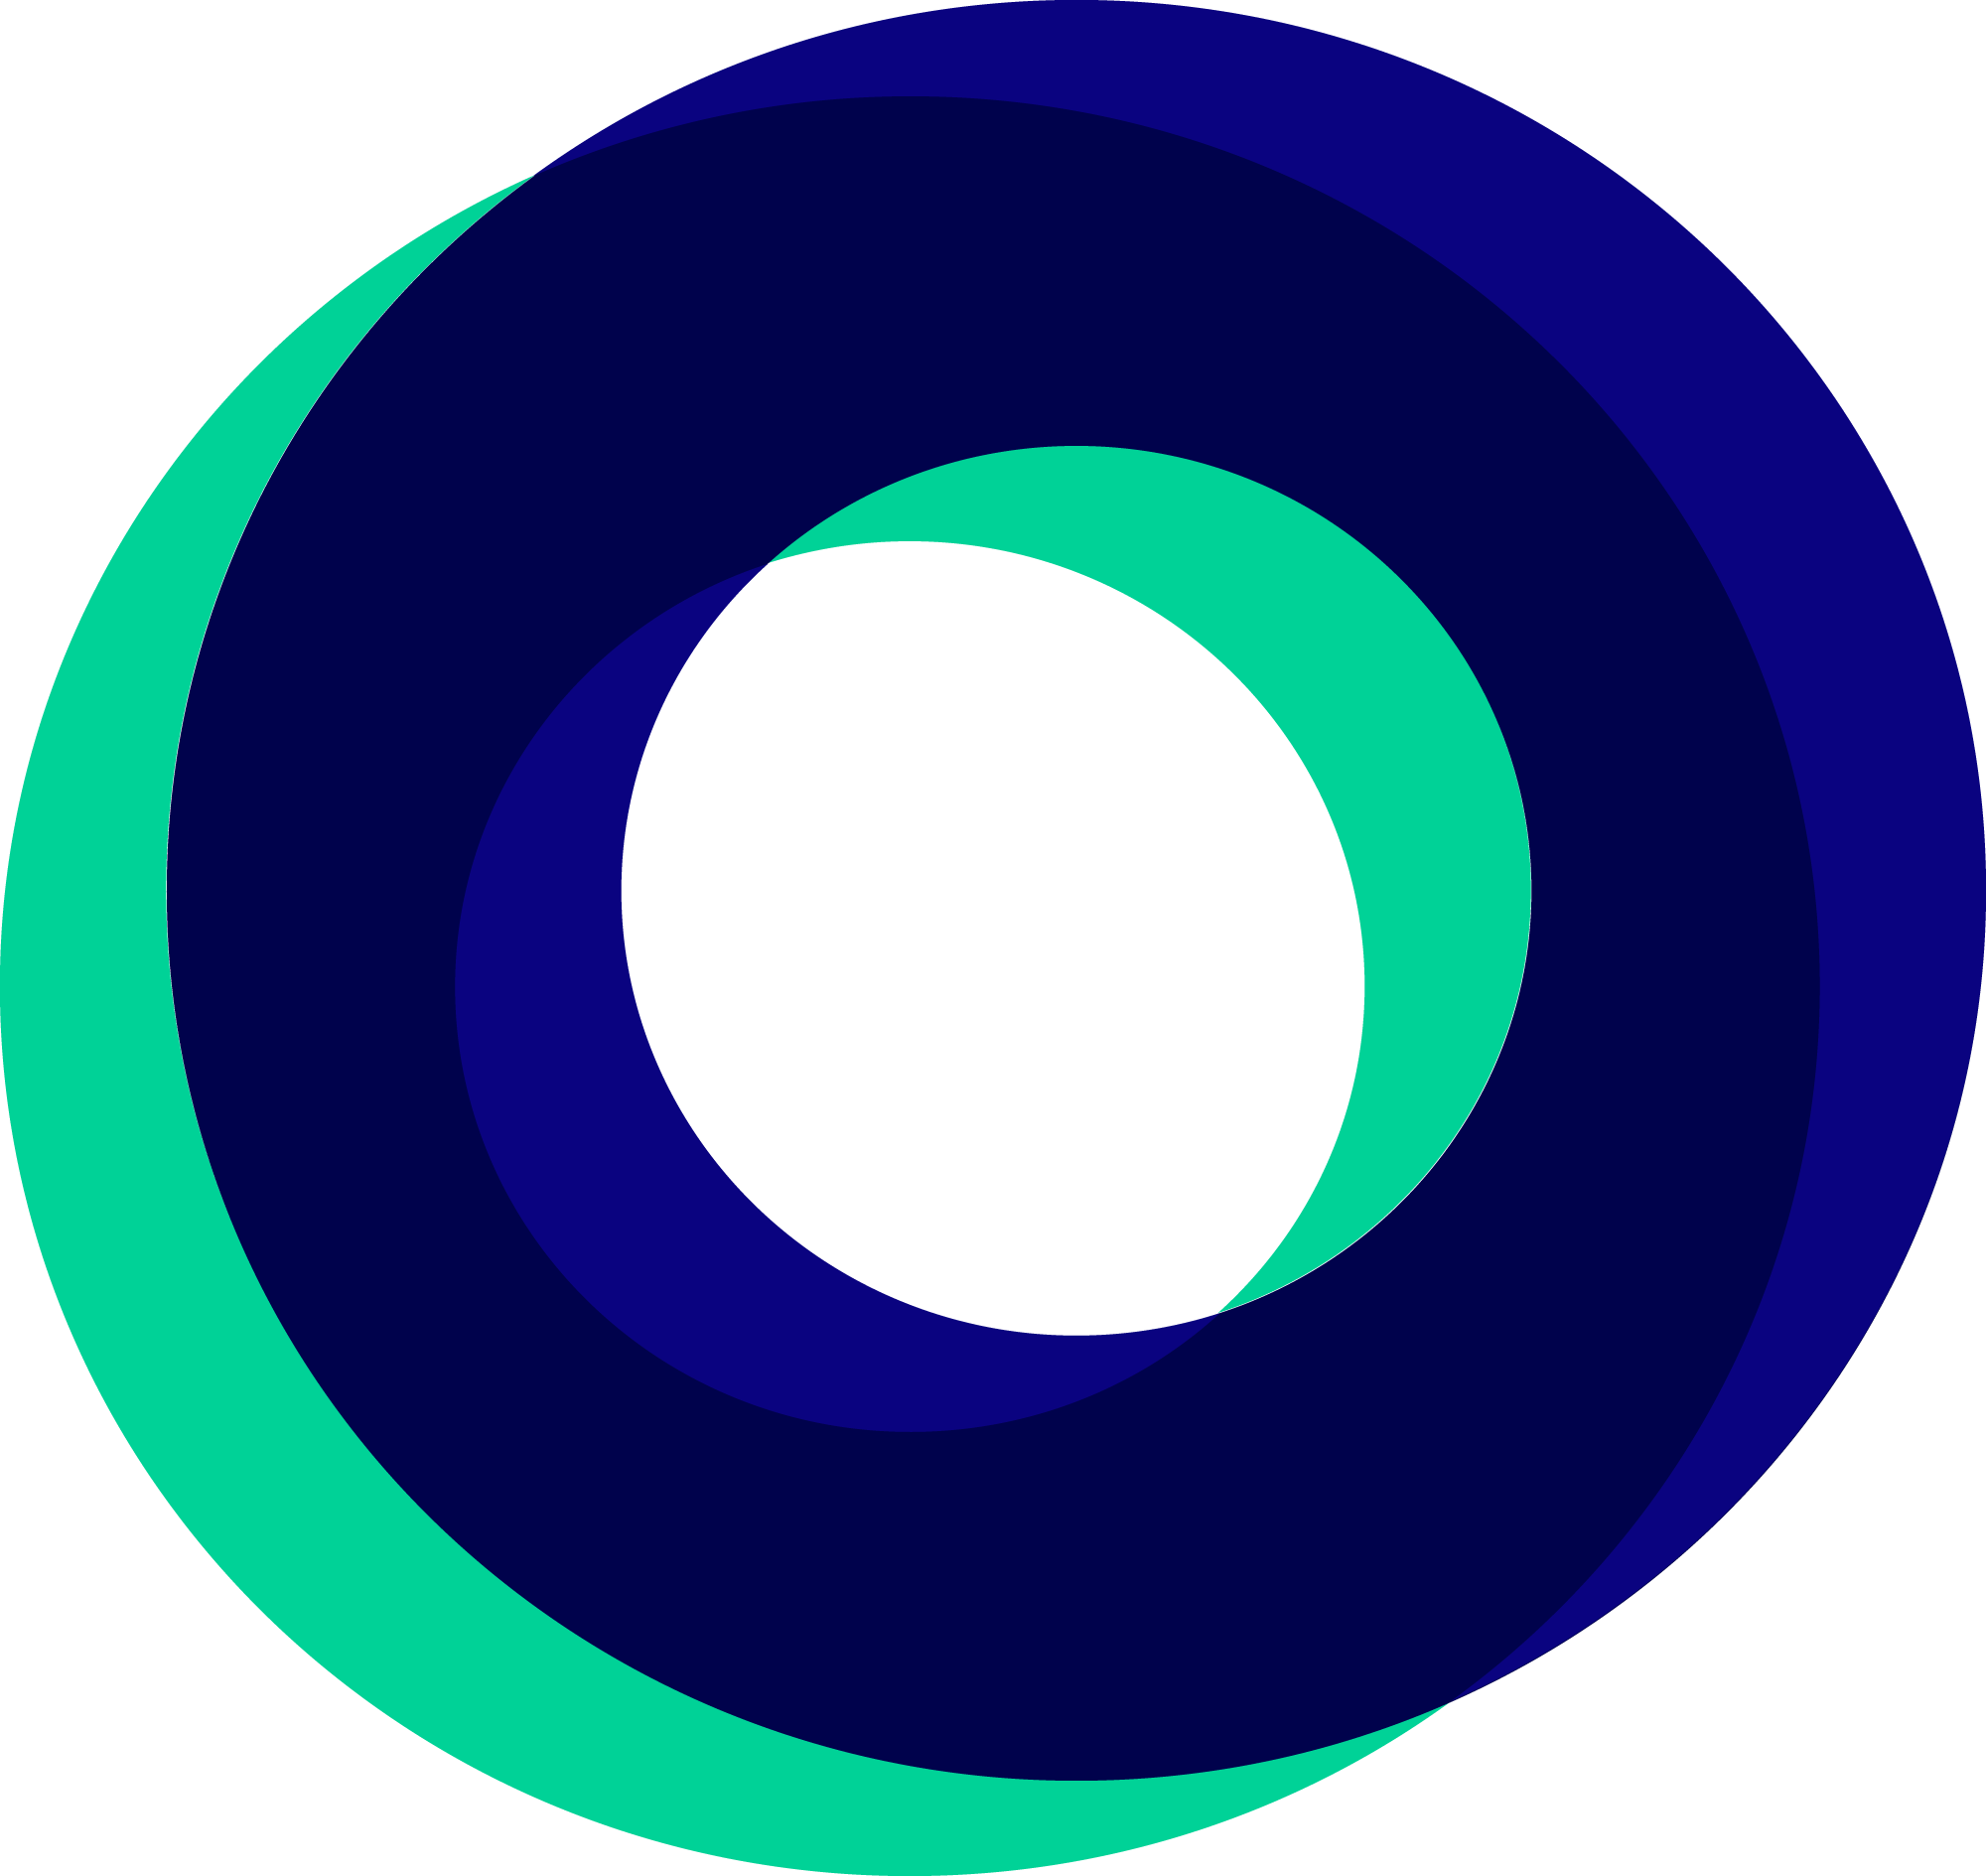 LINK Logo